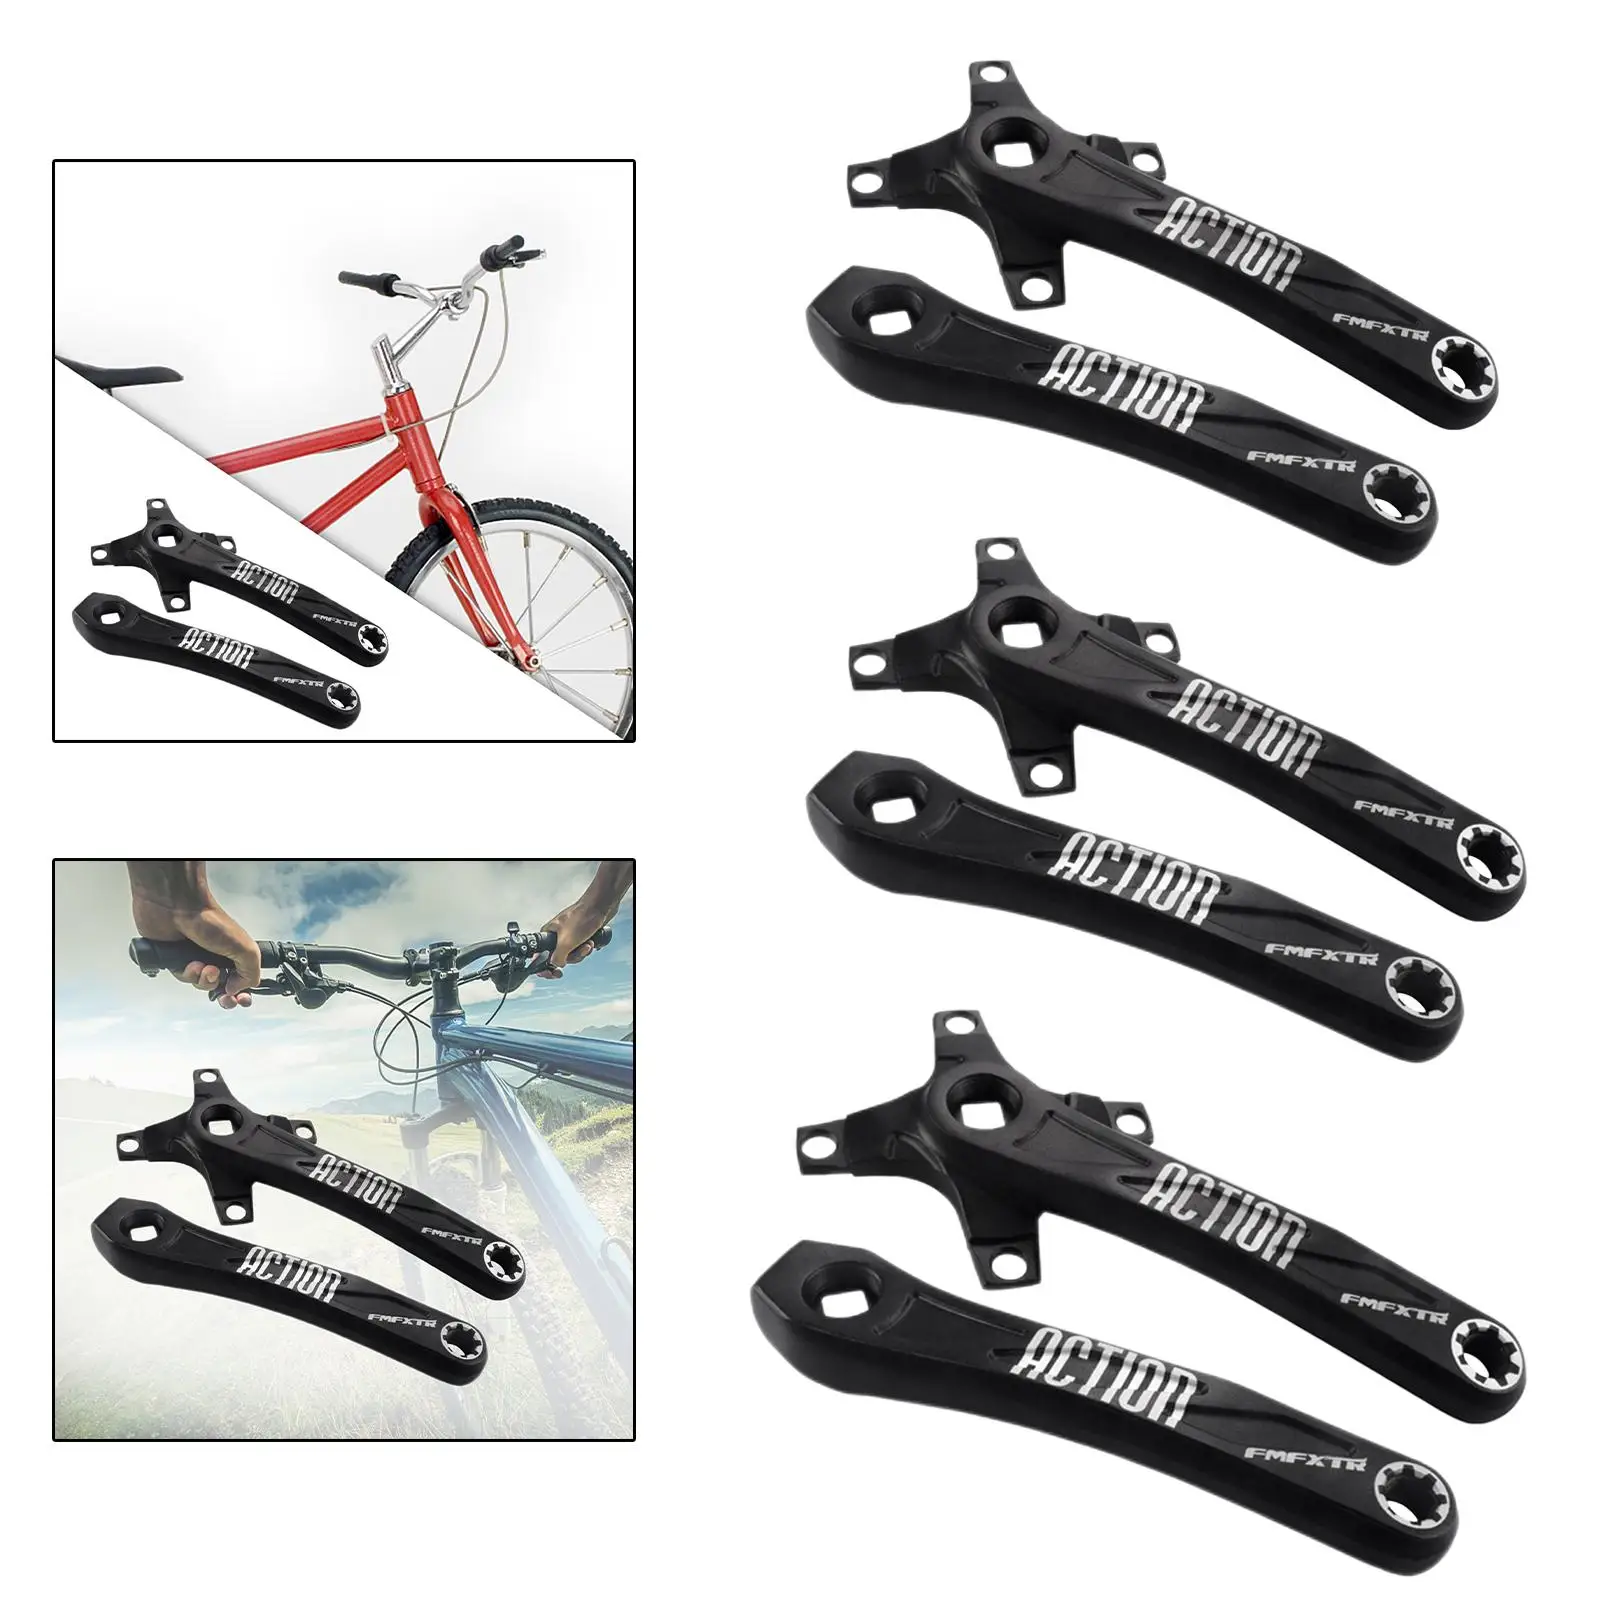 Road Bike Crank Arm Crankset 104 BCD Bicycle Cycling Accessories Repair Parts